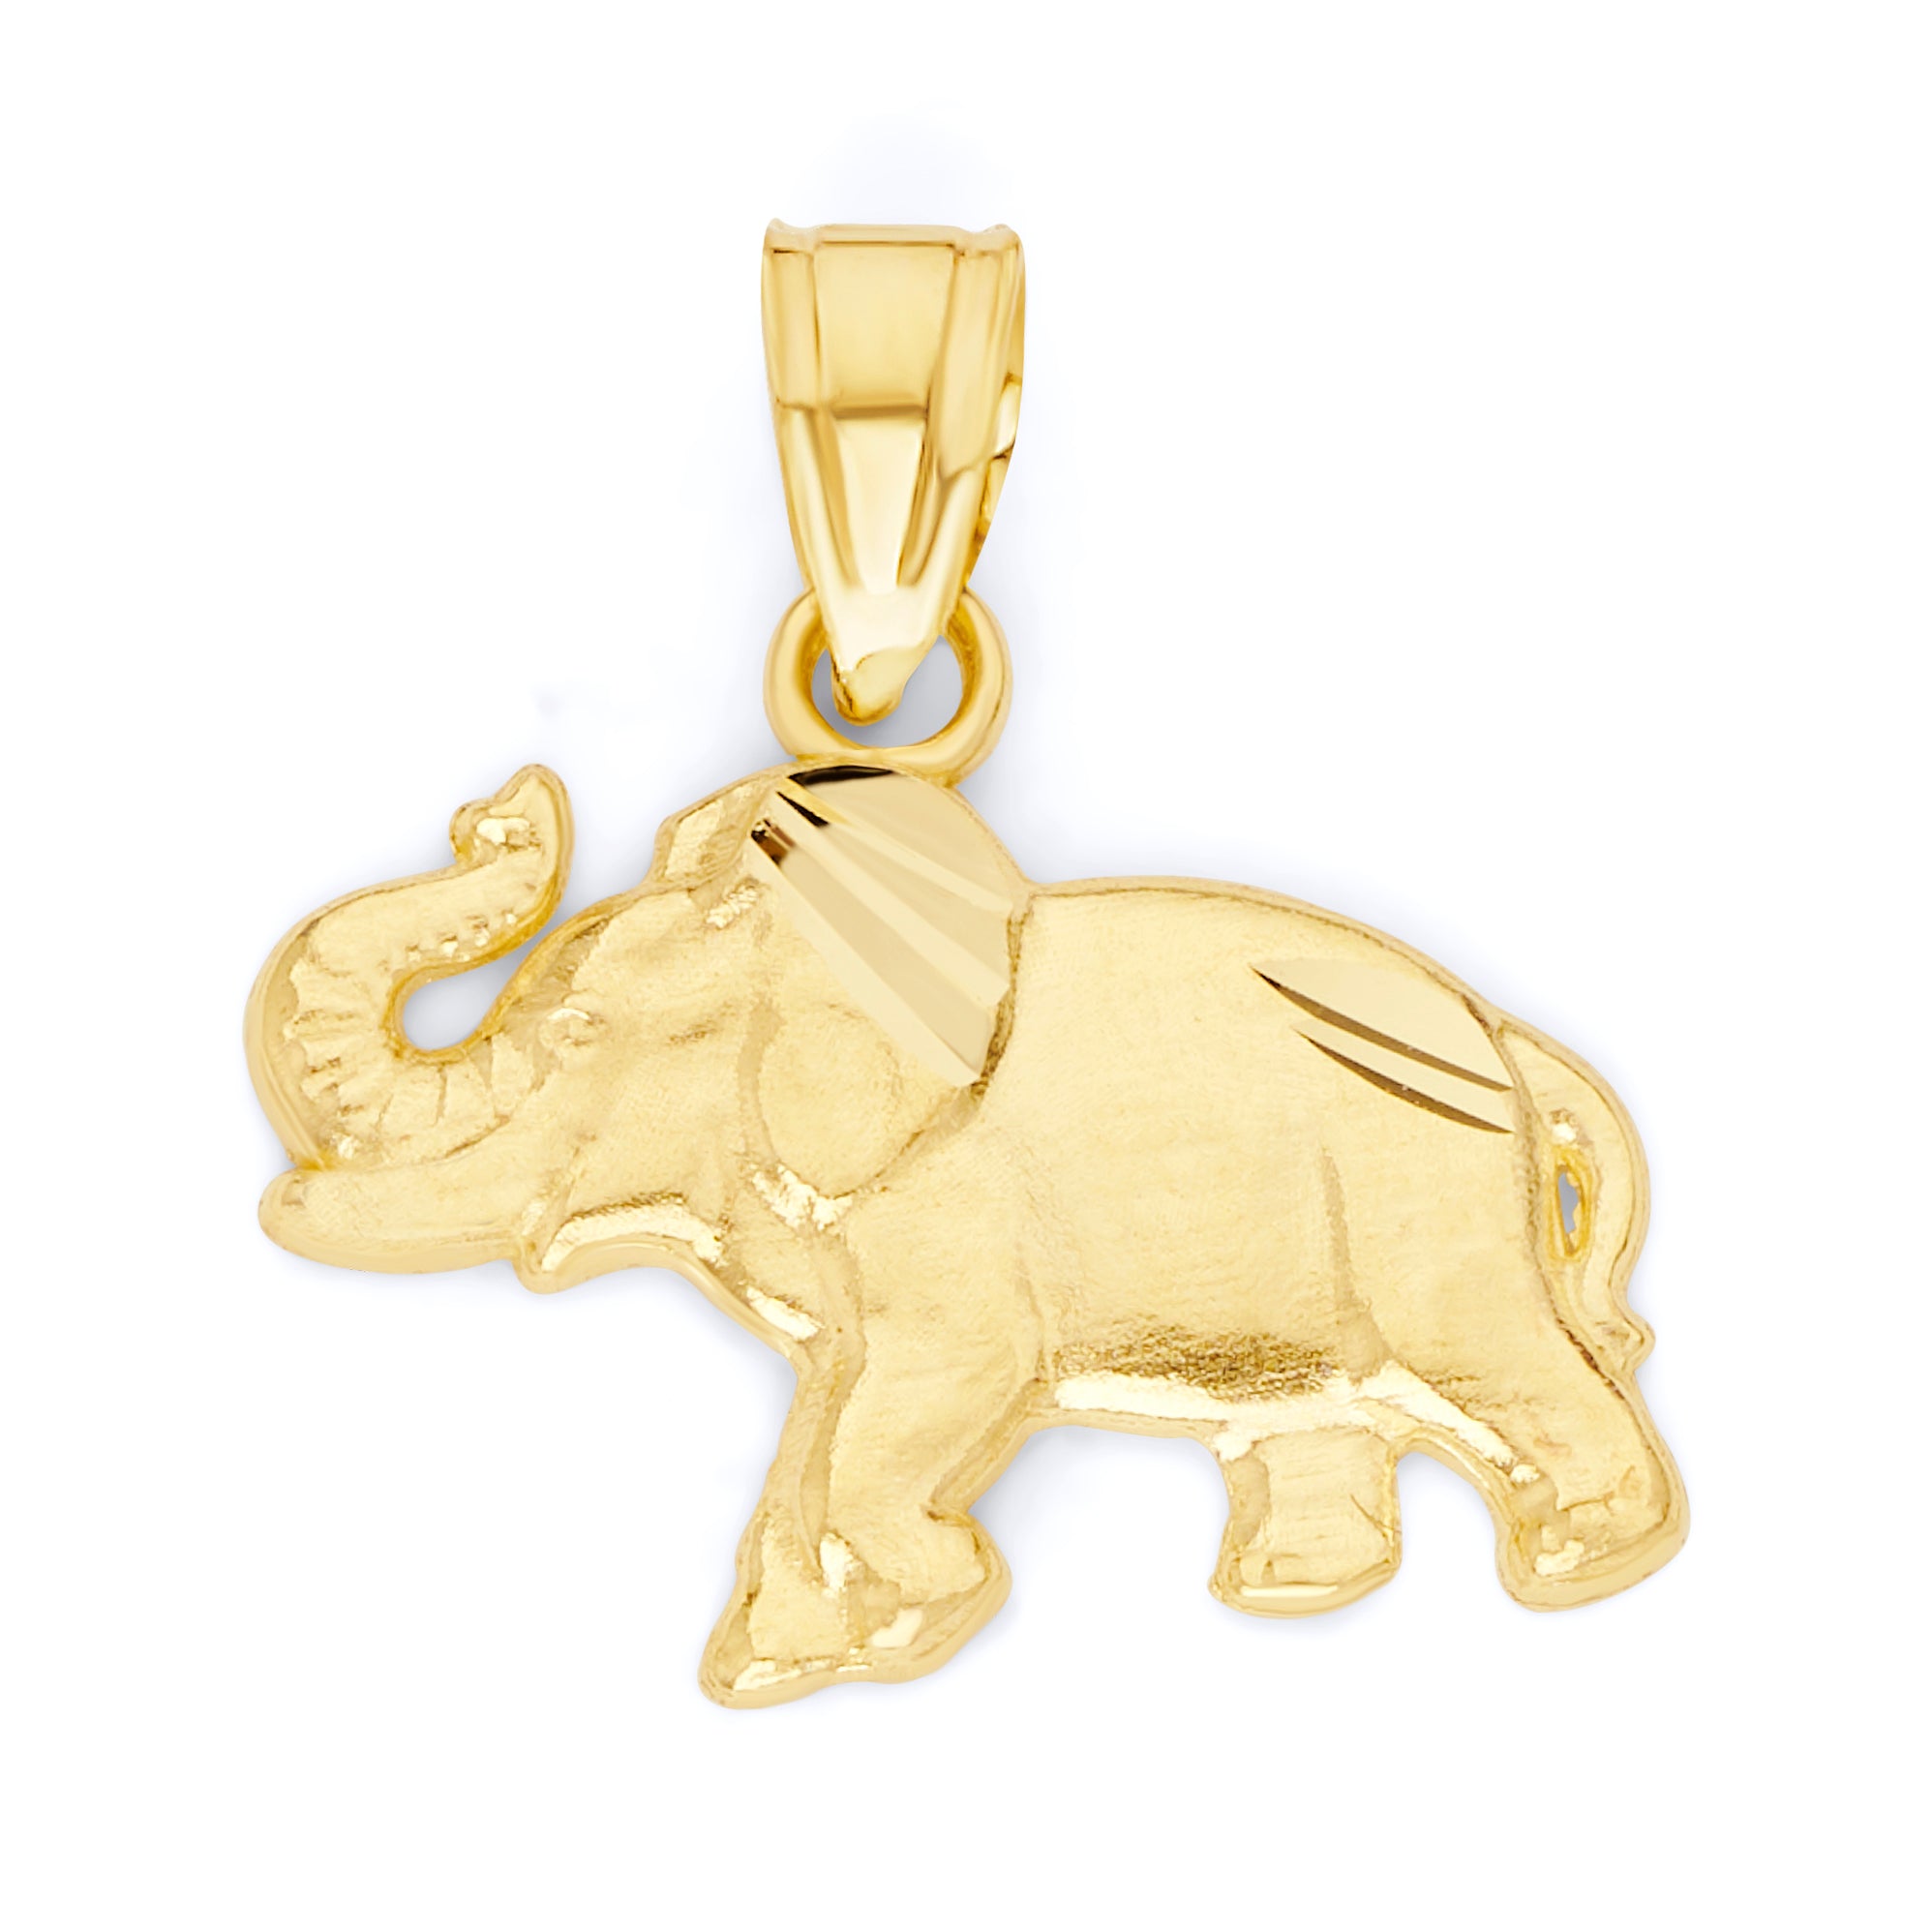 Solid Gold Elephant Pendant - 10k or 14k